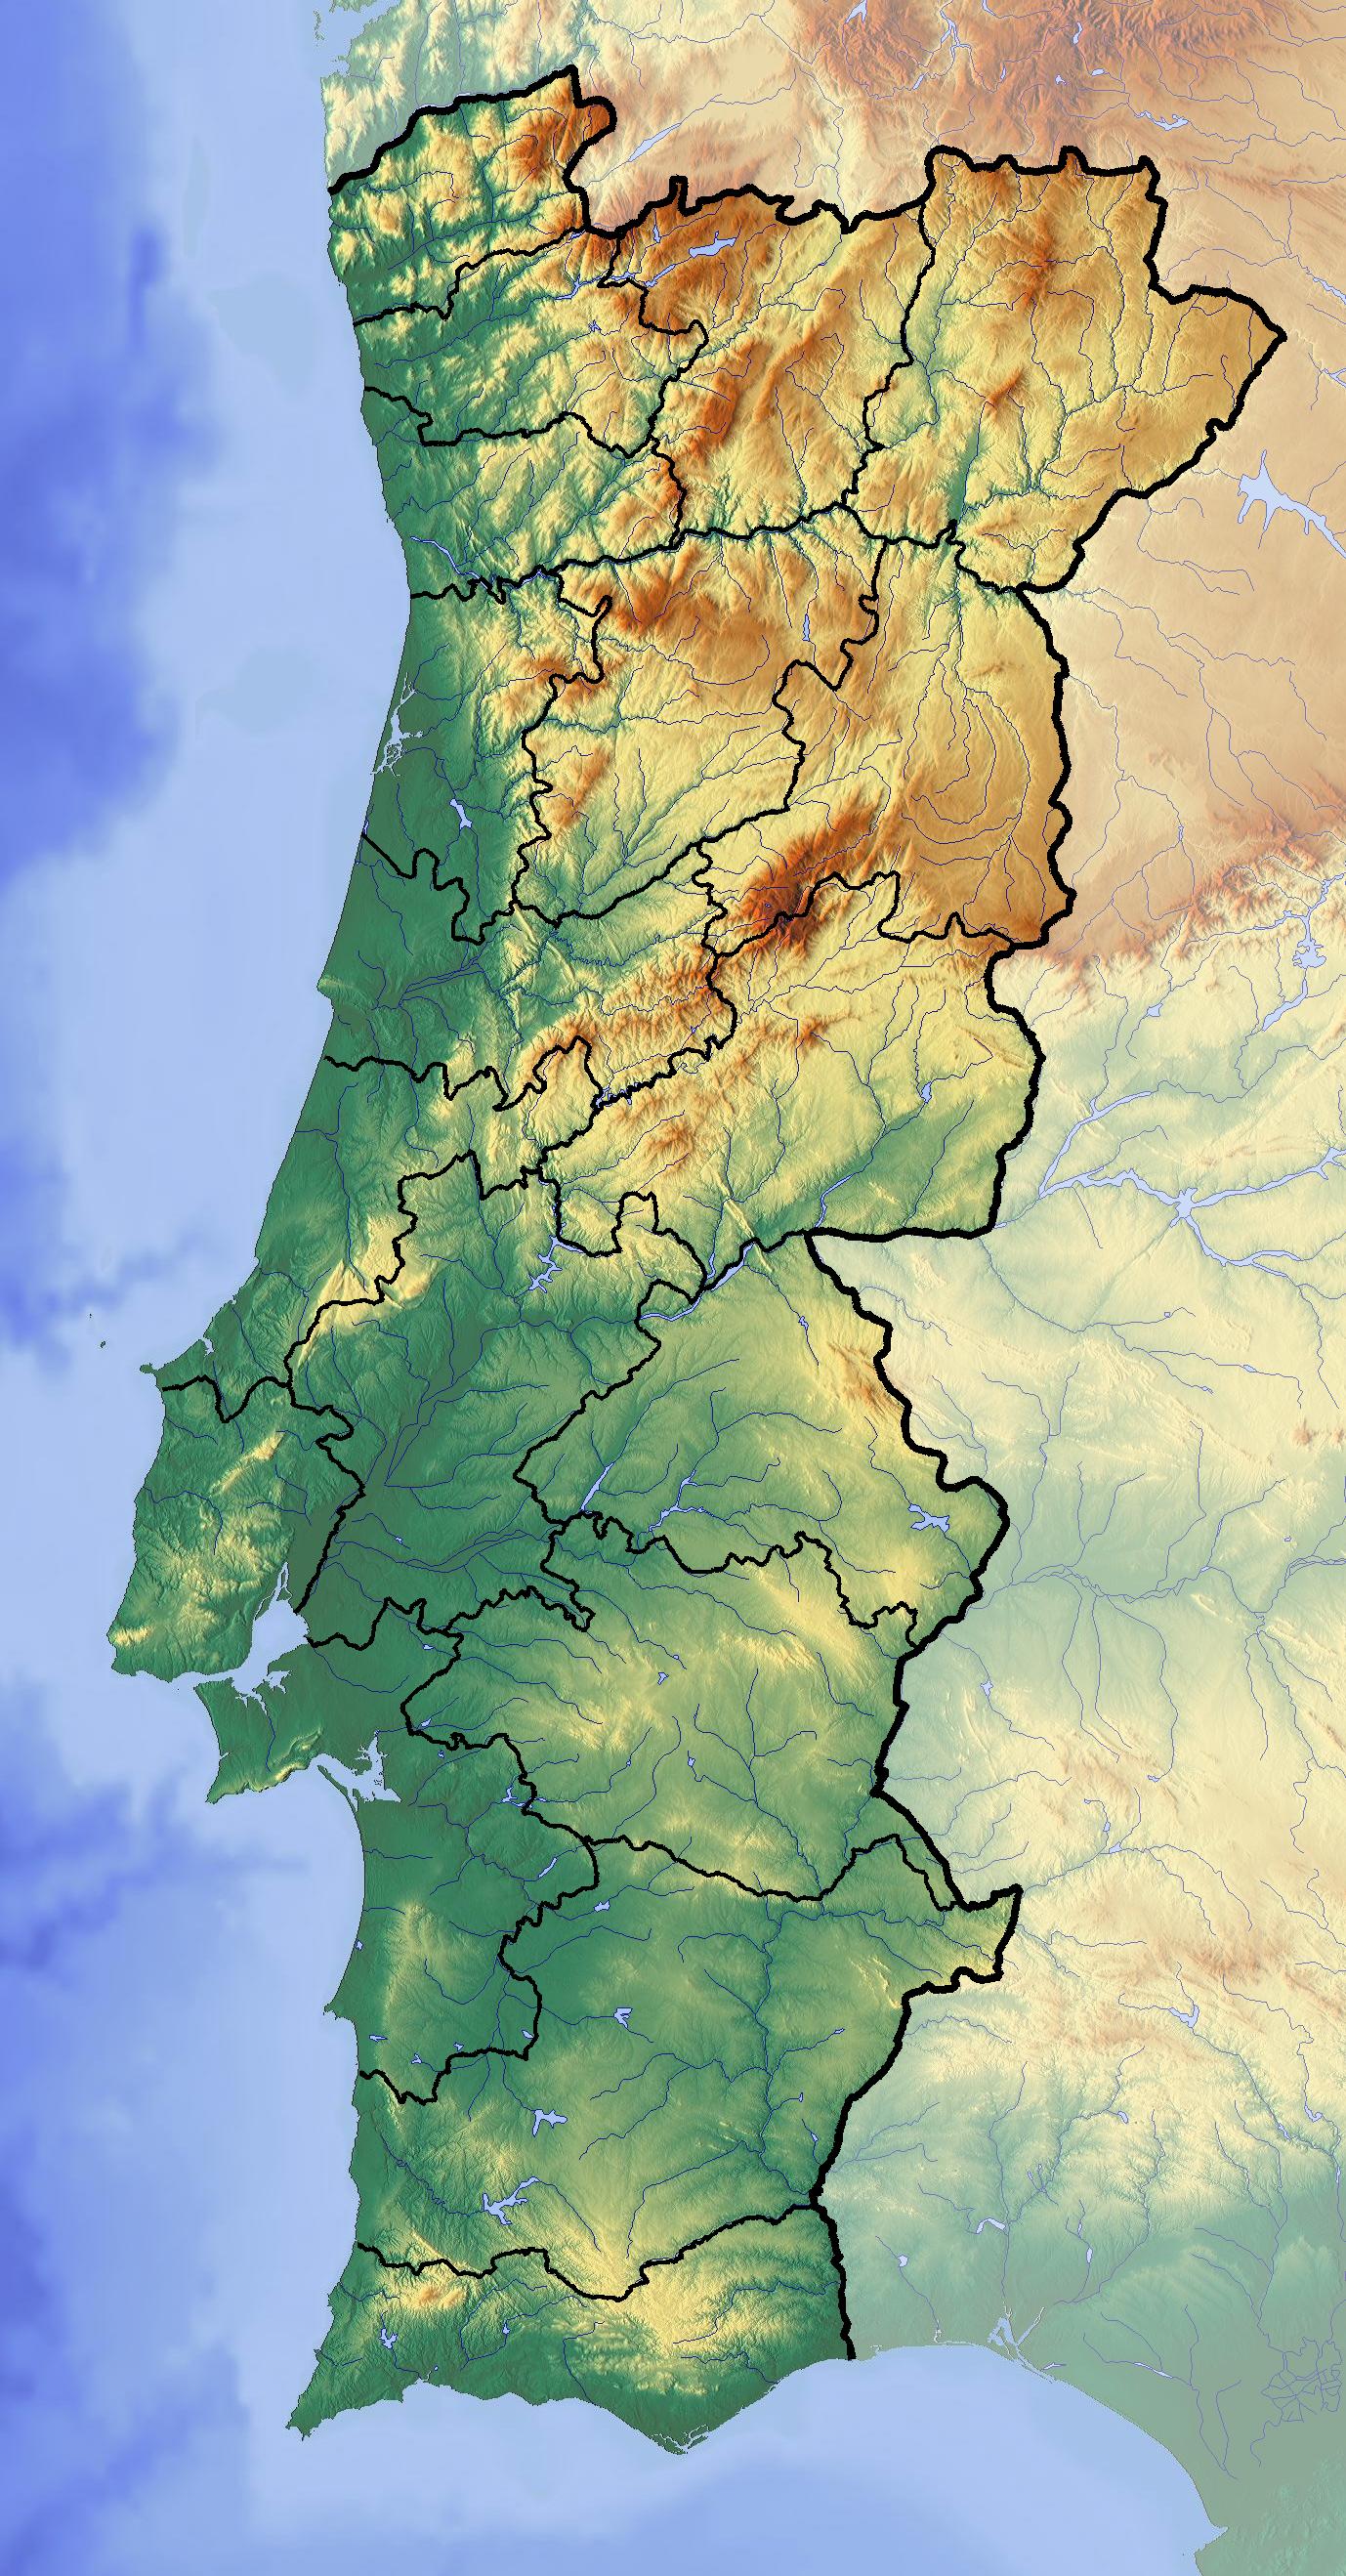 Mapa Político de Portugal: Zona Norte